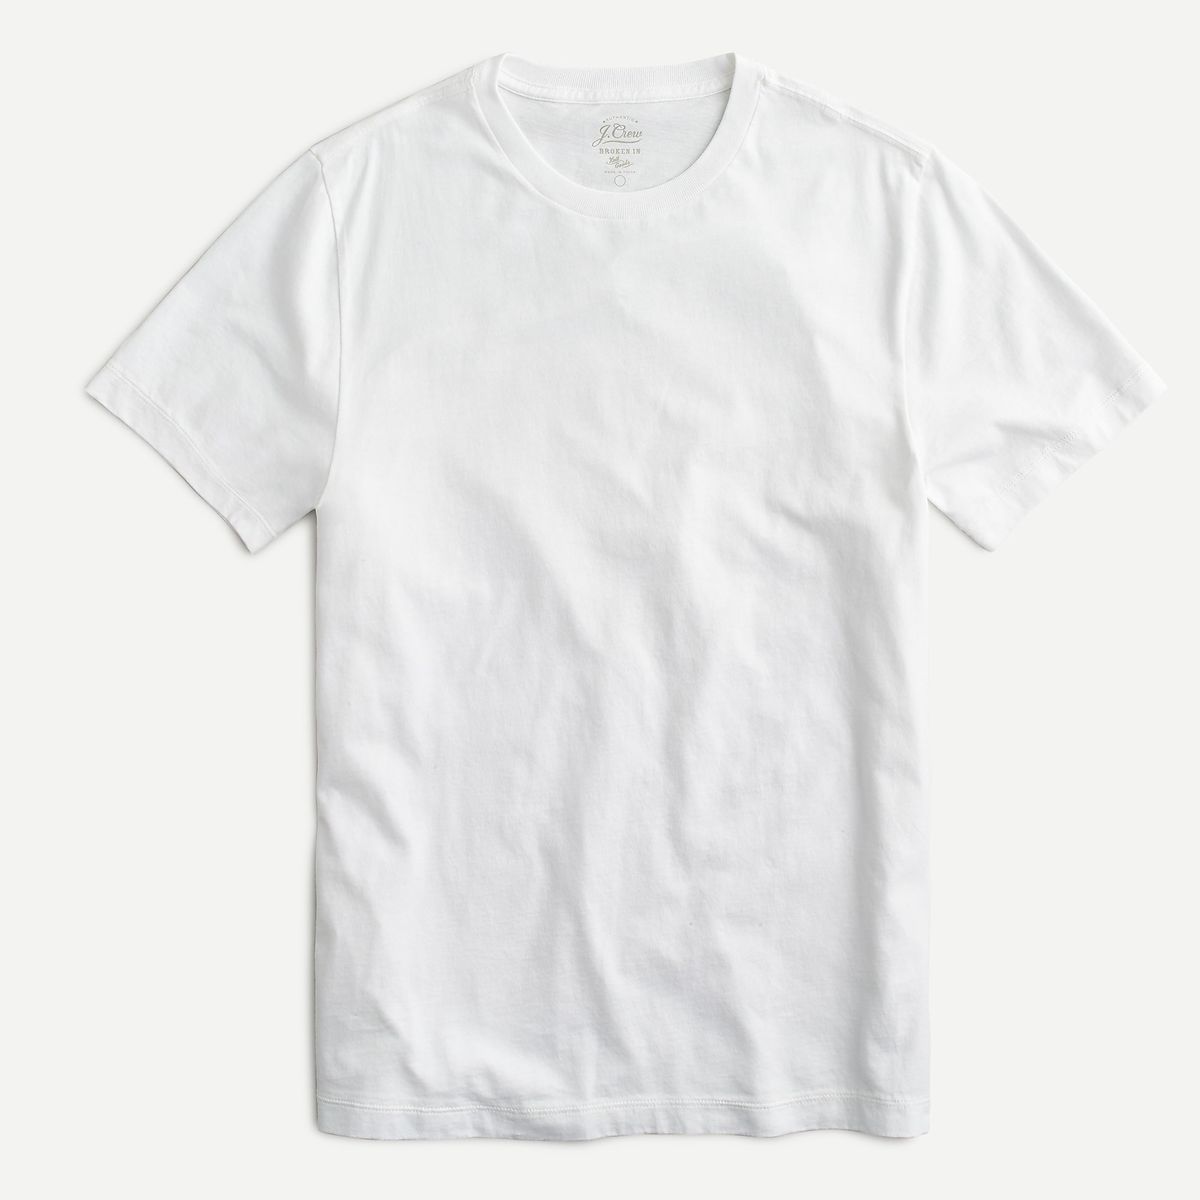 Mens Classic T Shirt Pewdiepie Logo Tee Shirts Short Sleeve Tshirt Apparel for Men Tshirt Crew Neck Clothes White 